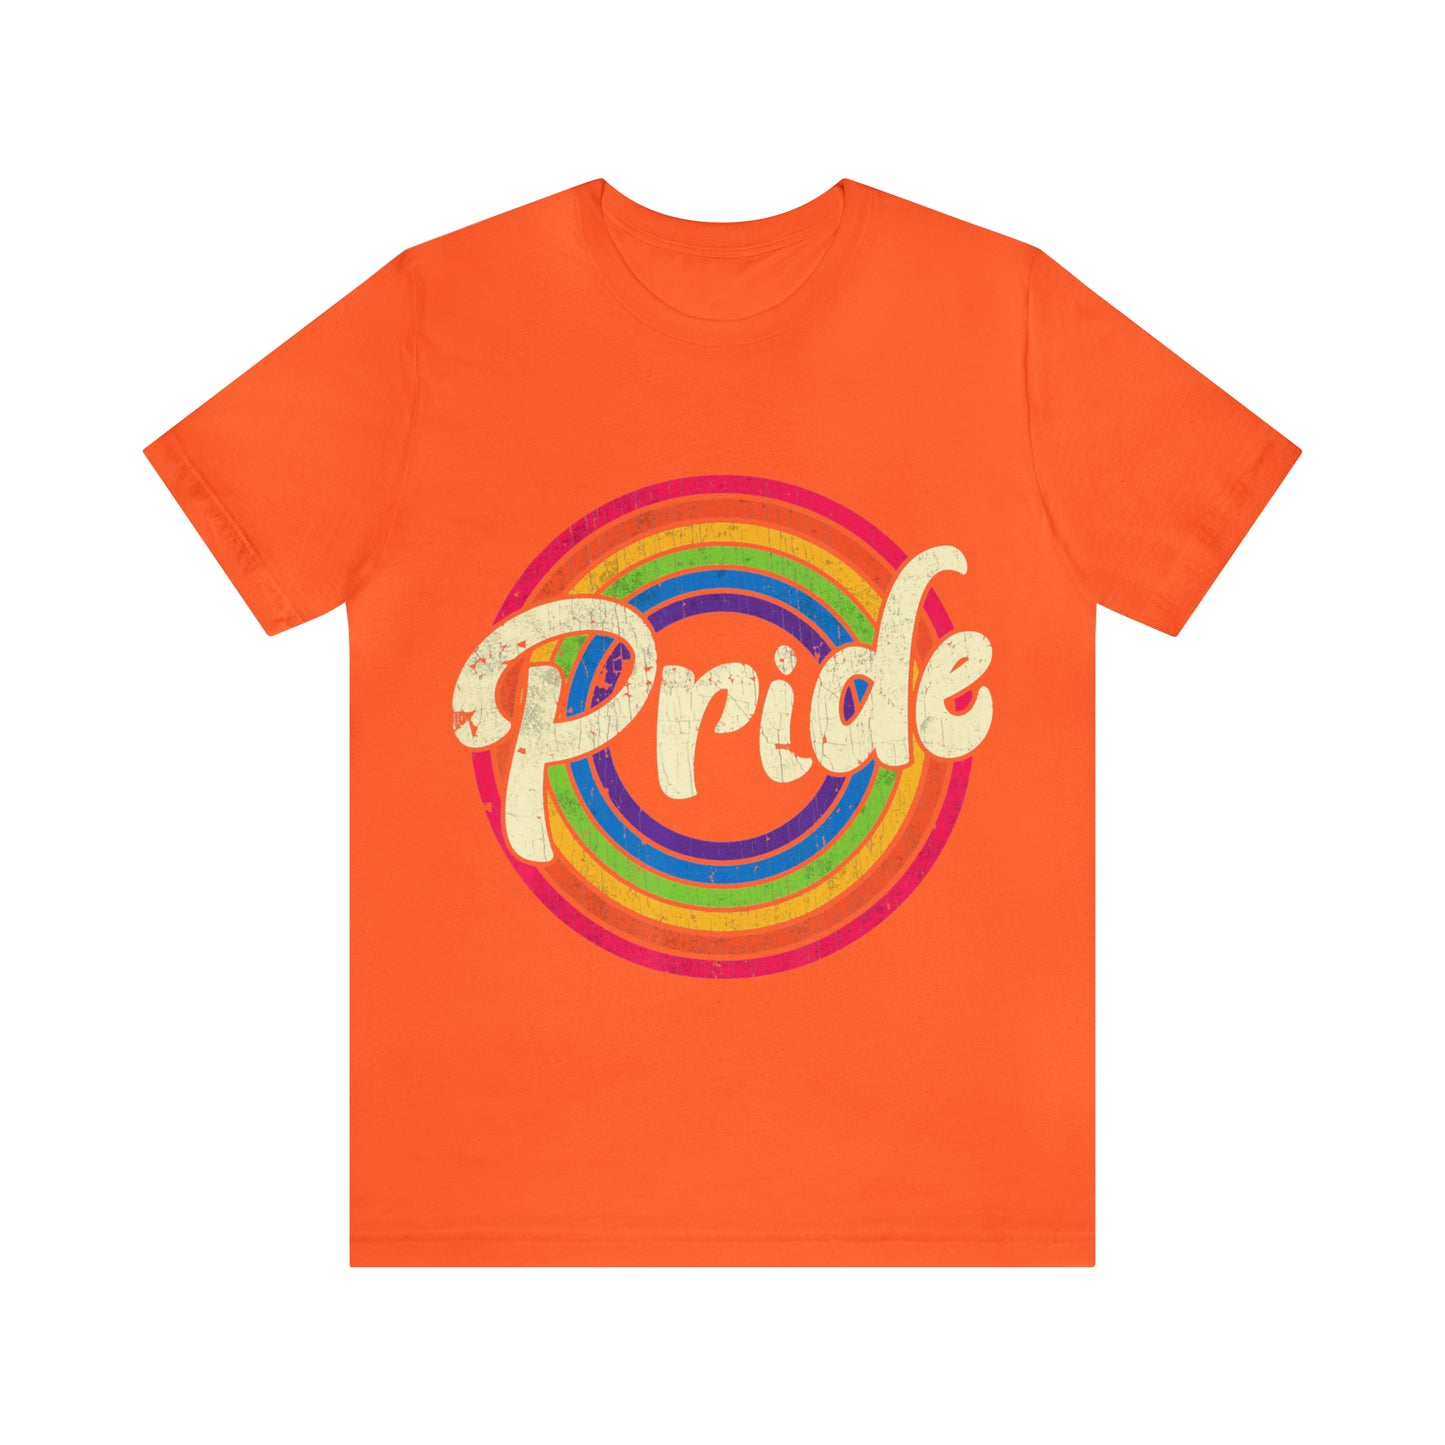 Pride with Circle Rainbow - Unisex T-Shirt